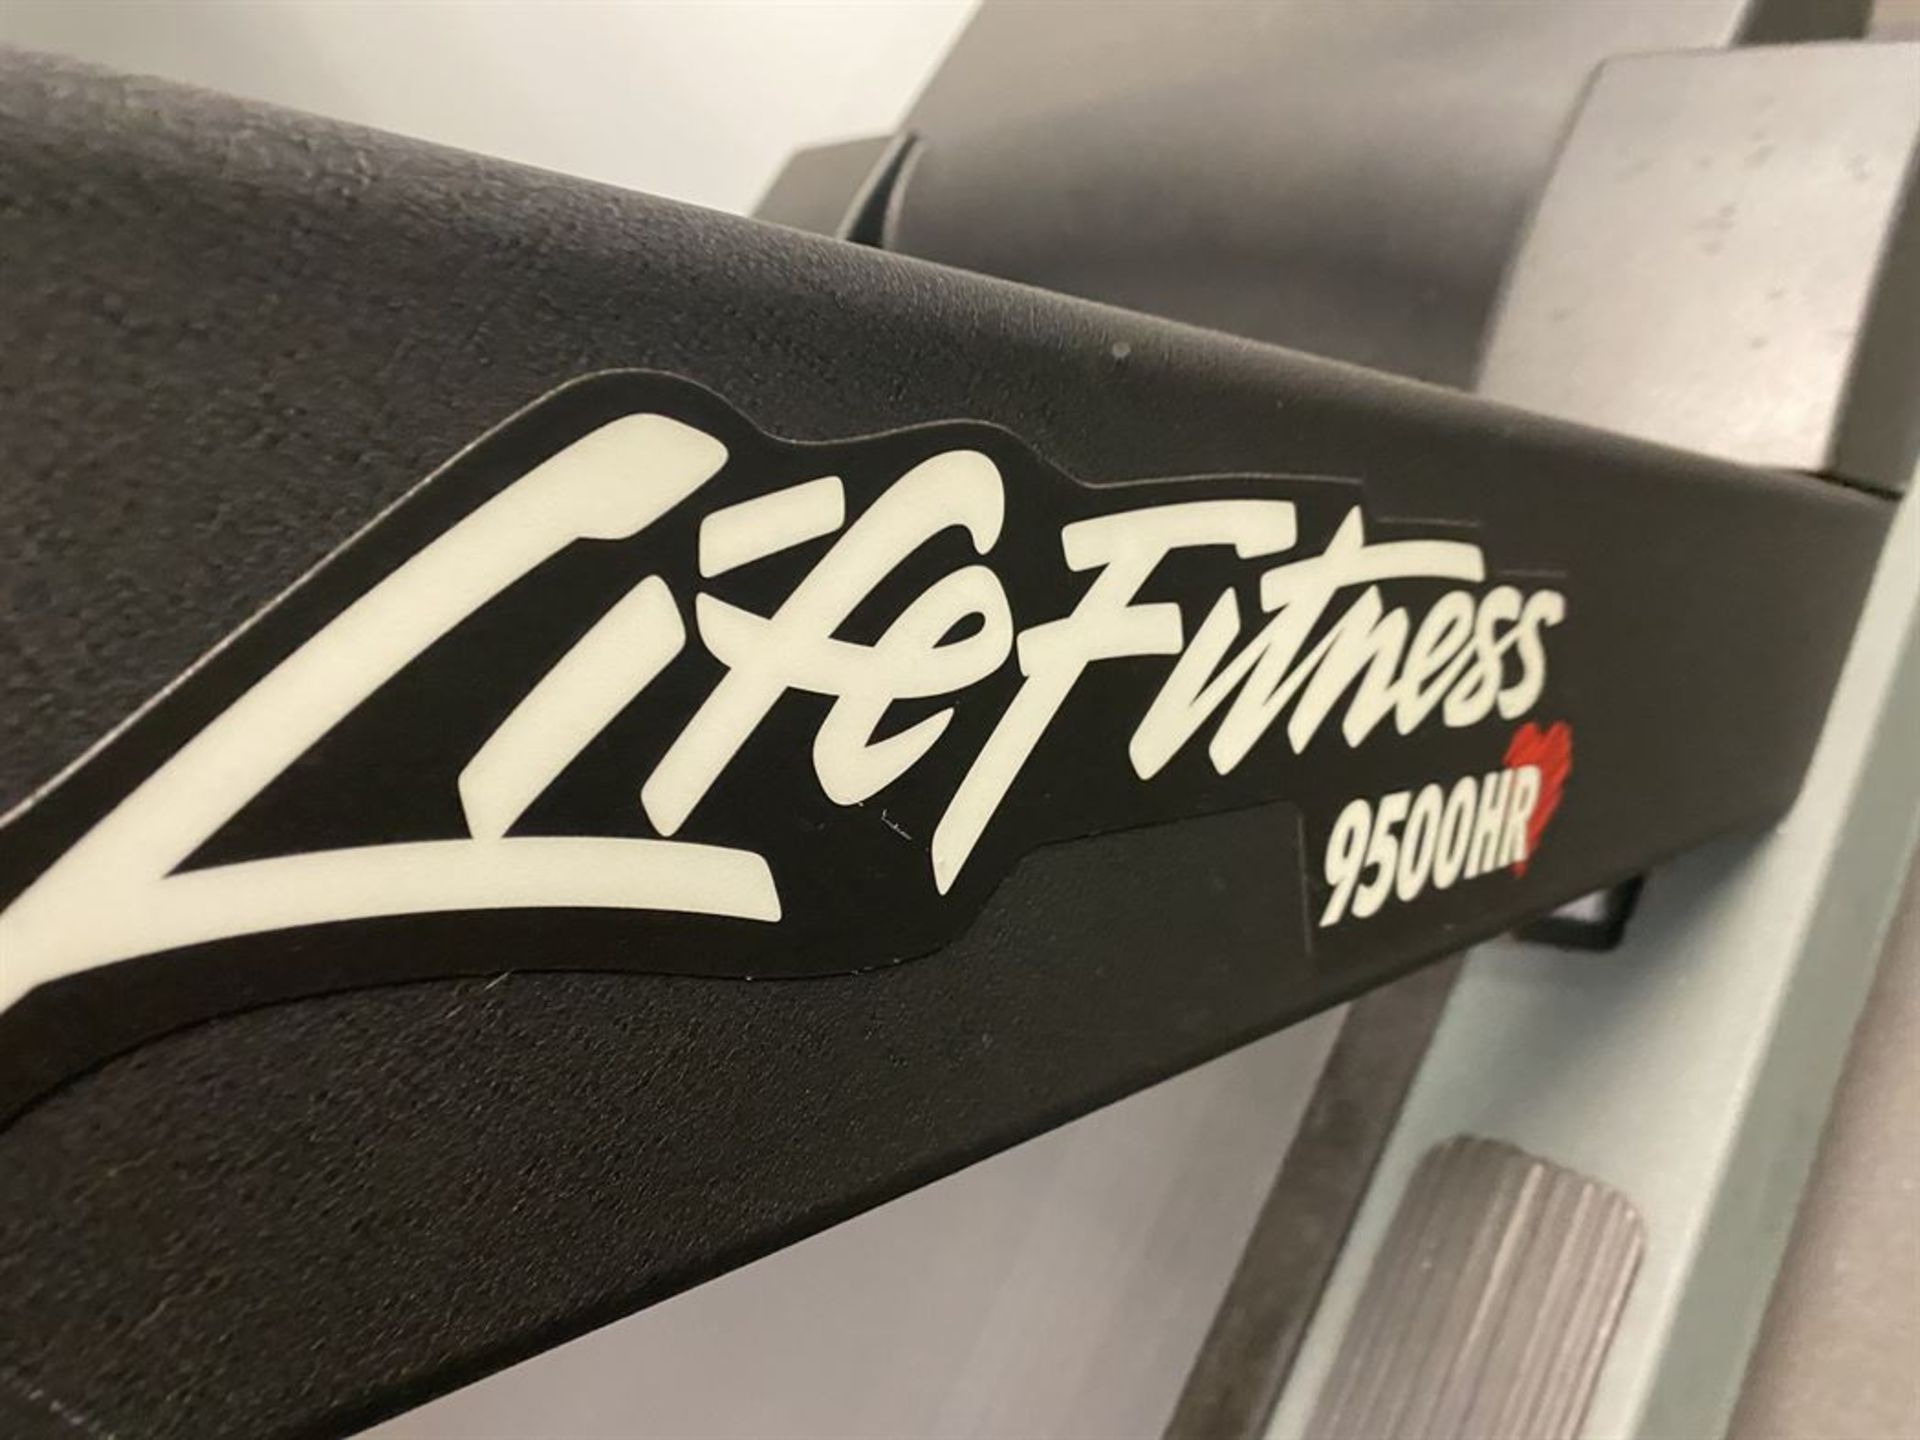 Life Fitness 9500HR Treadmill - Image 5 of 5